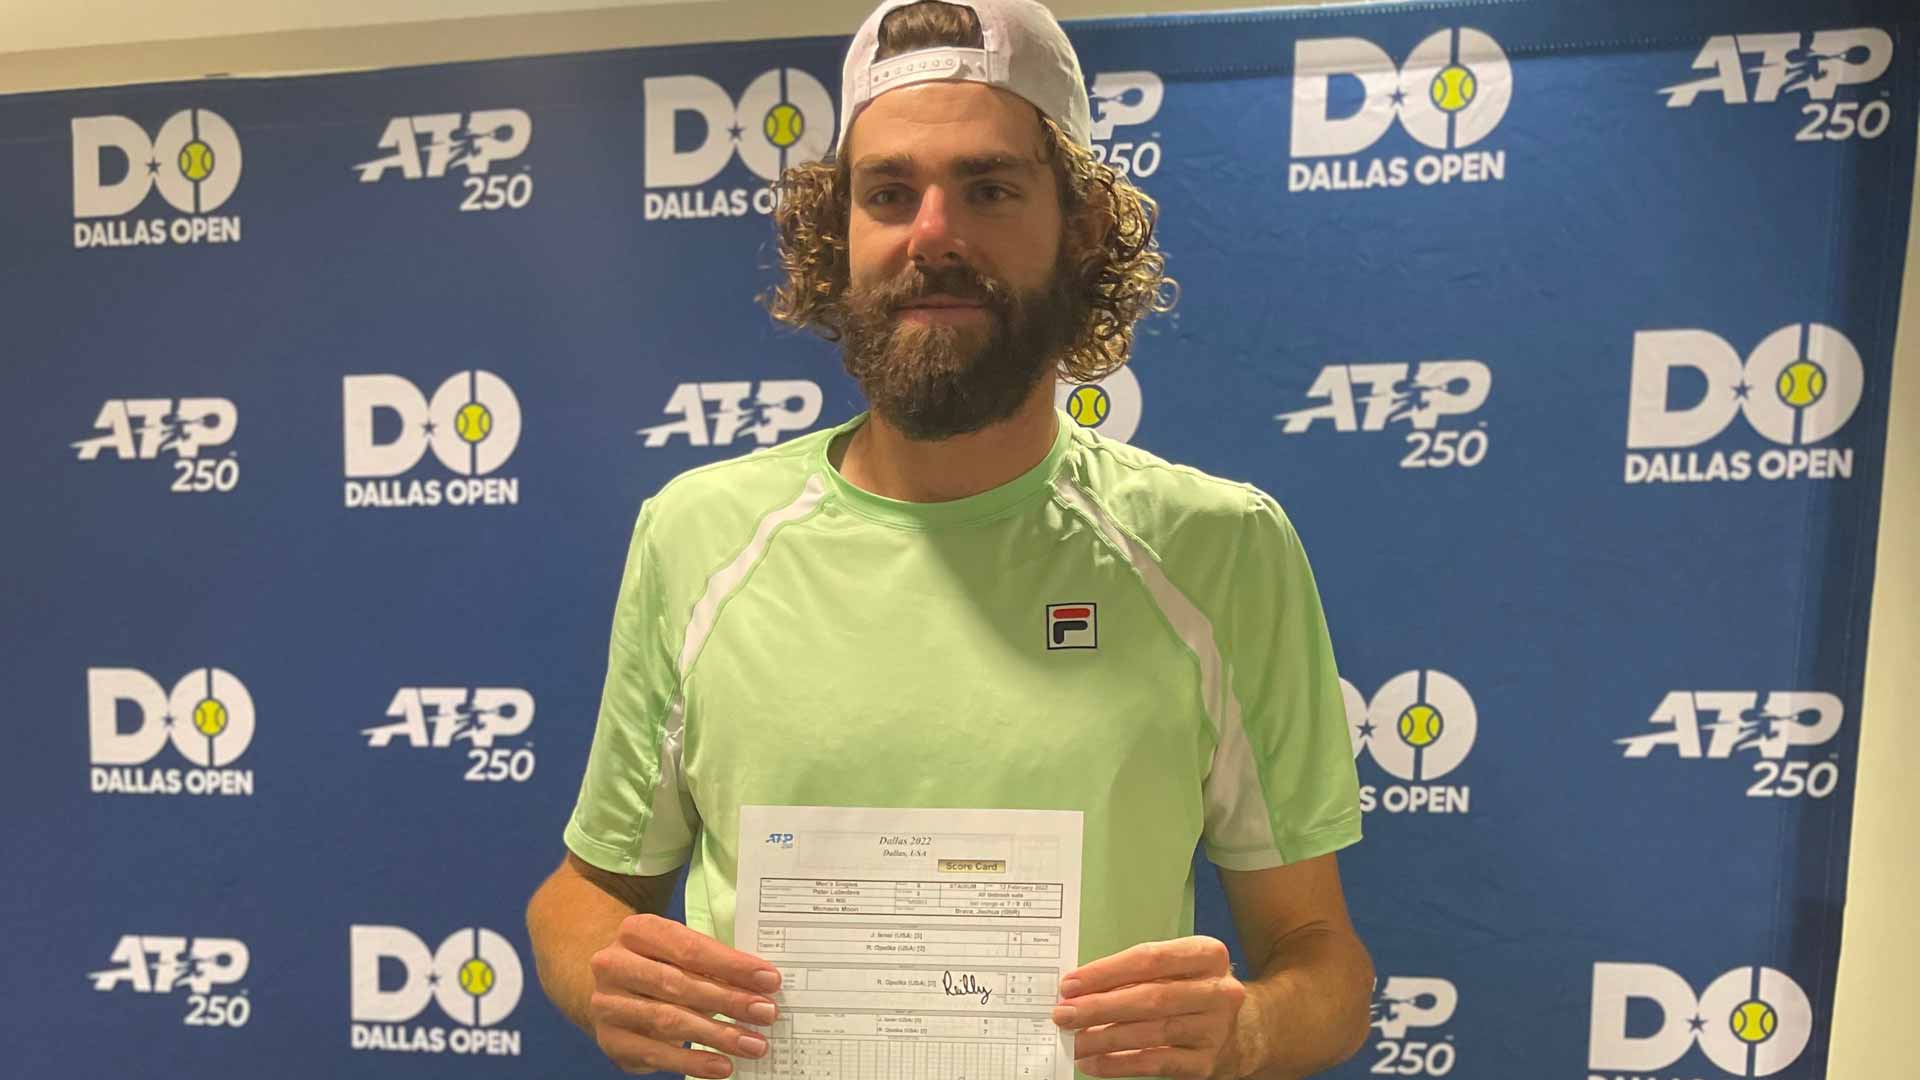 Opelka Isner Dallas 2022 Historic Tiebreak News Article Dallas Open Tennis